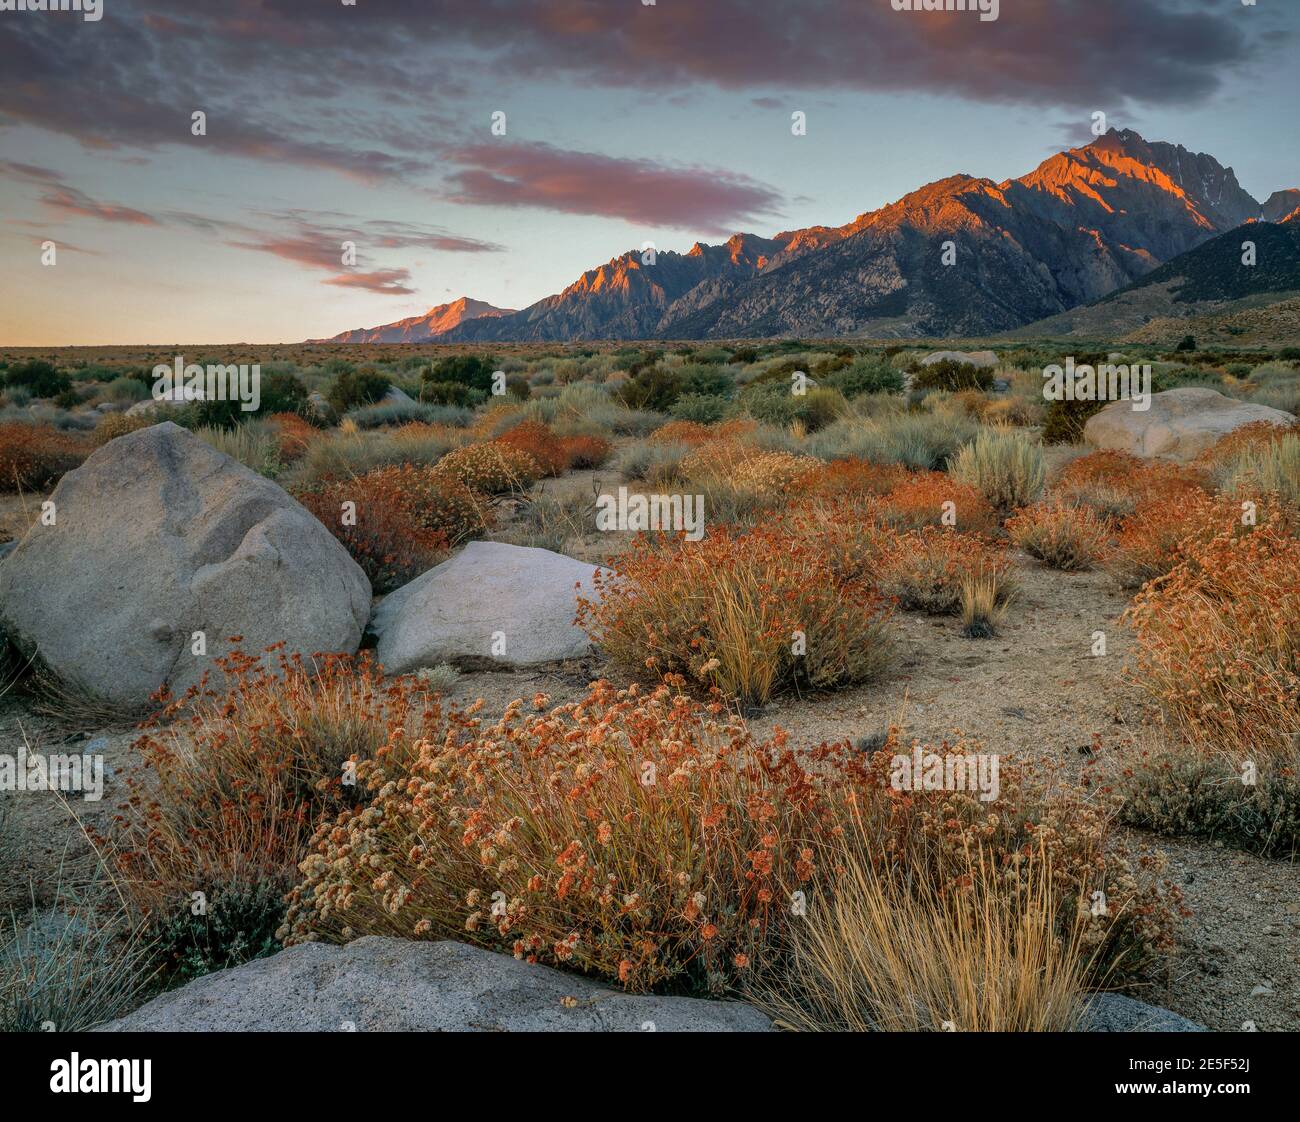 Amanecer, trigo sarraceno, Mt. Williamson, Bosque Nacional Inyo, Sierra Oriental, Sierra Nevada Range, California Foto de stock